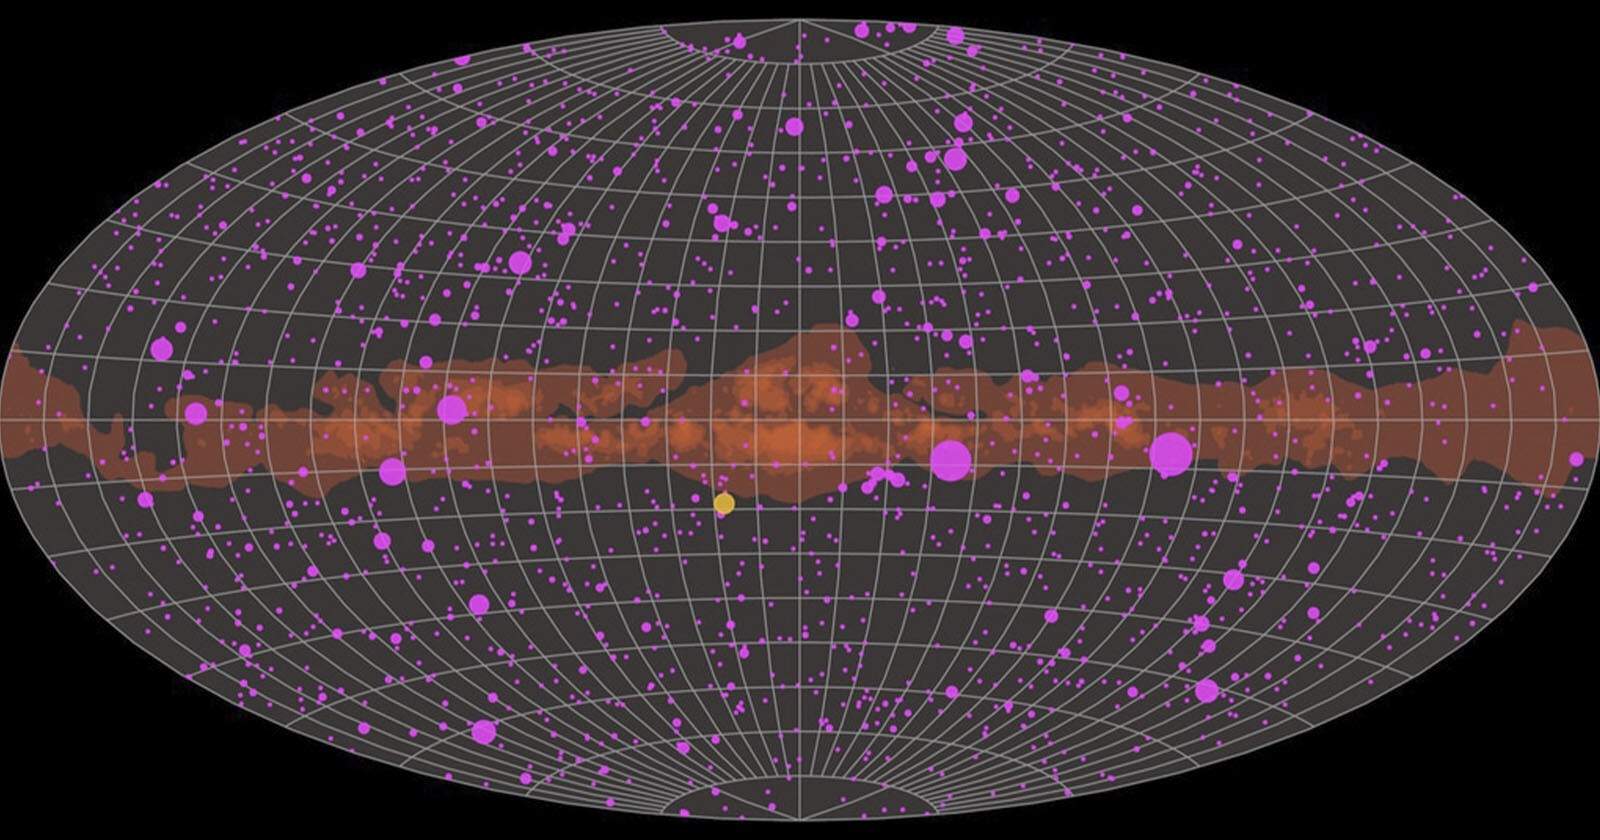  animated map charts intense gamma-ray blasts across 